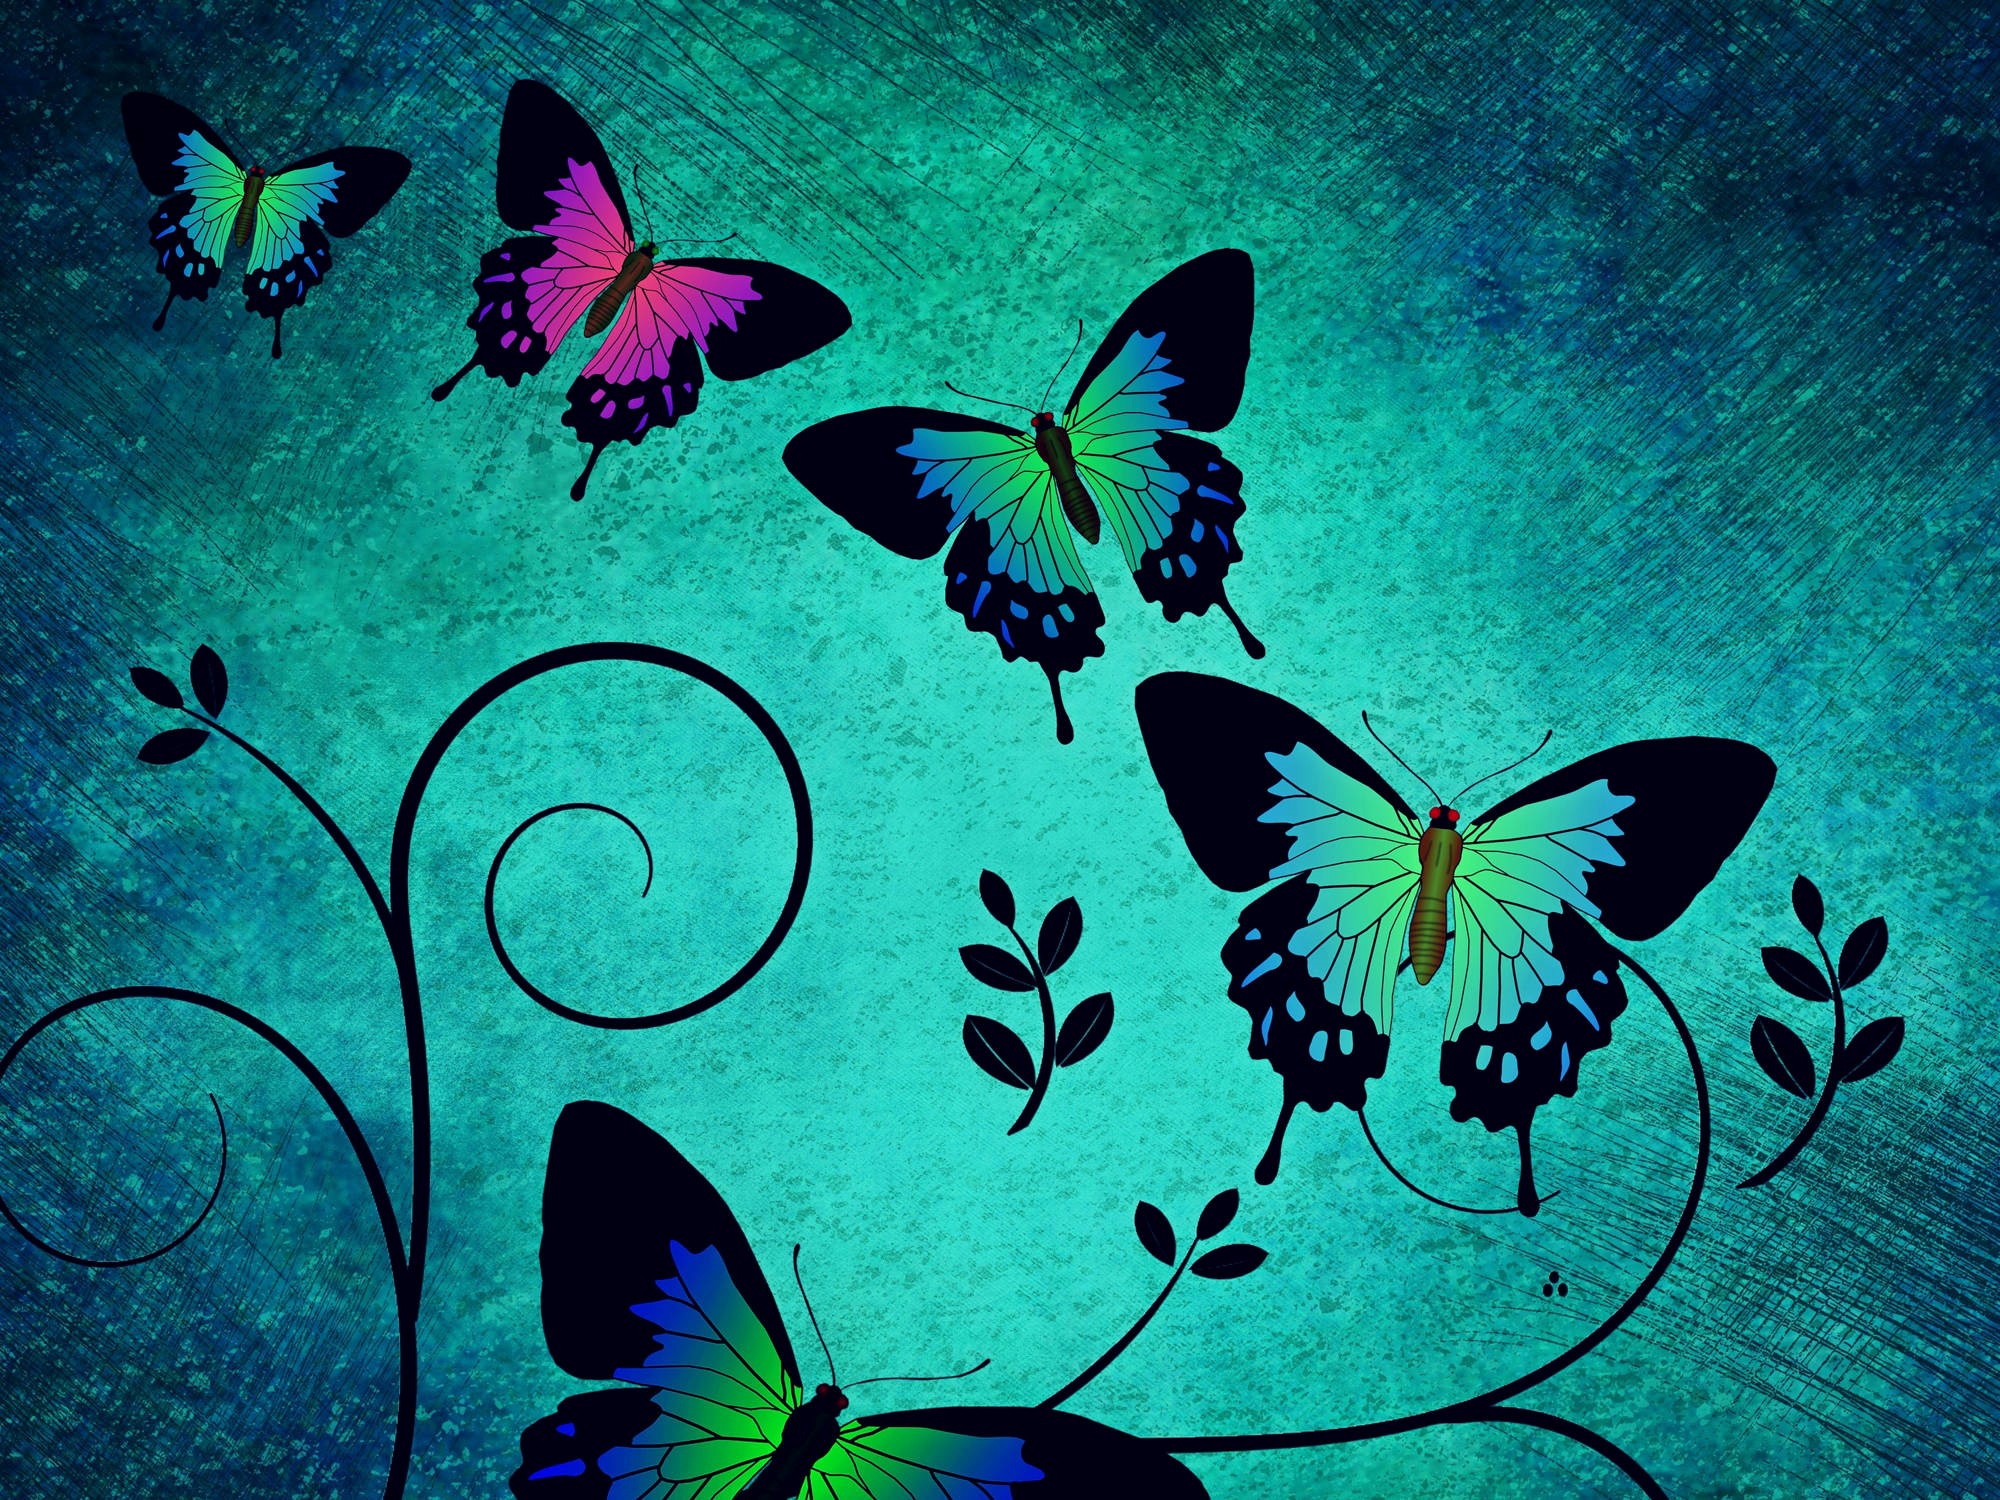 mariposa live wallpaper,mariposa,polillas y mariposas,insecto,azul,turquesa